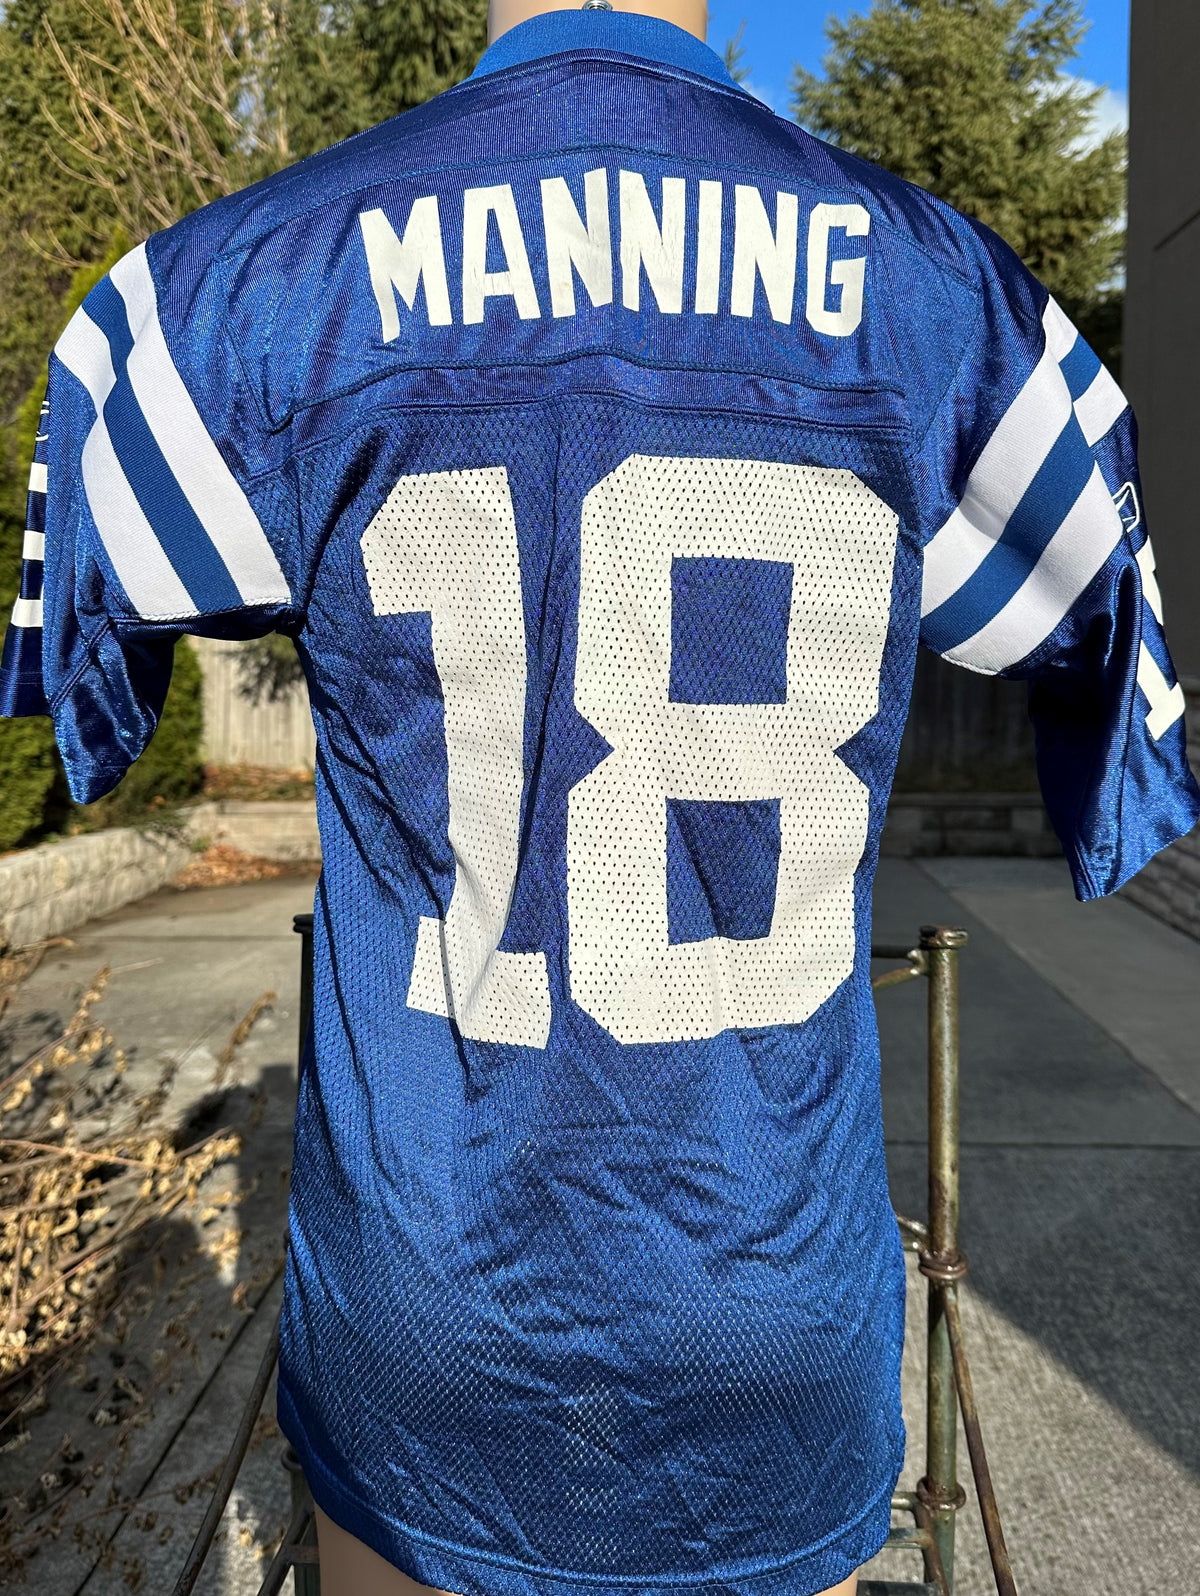 Peyton Manning Colts #18 Reebok NFL Players Football Jersey Adult Medium VG+